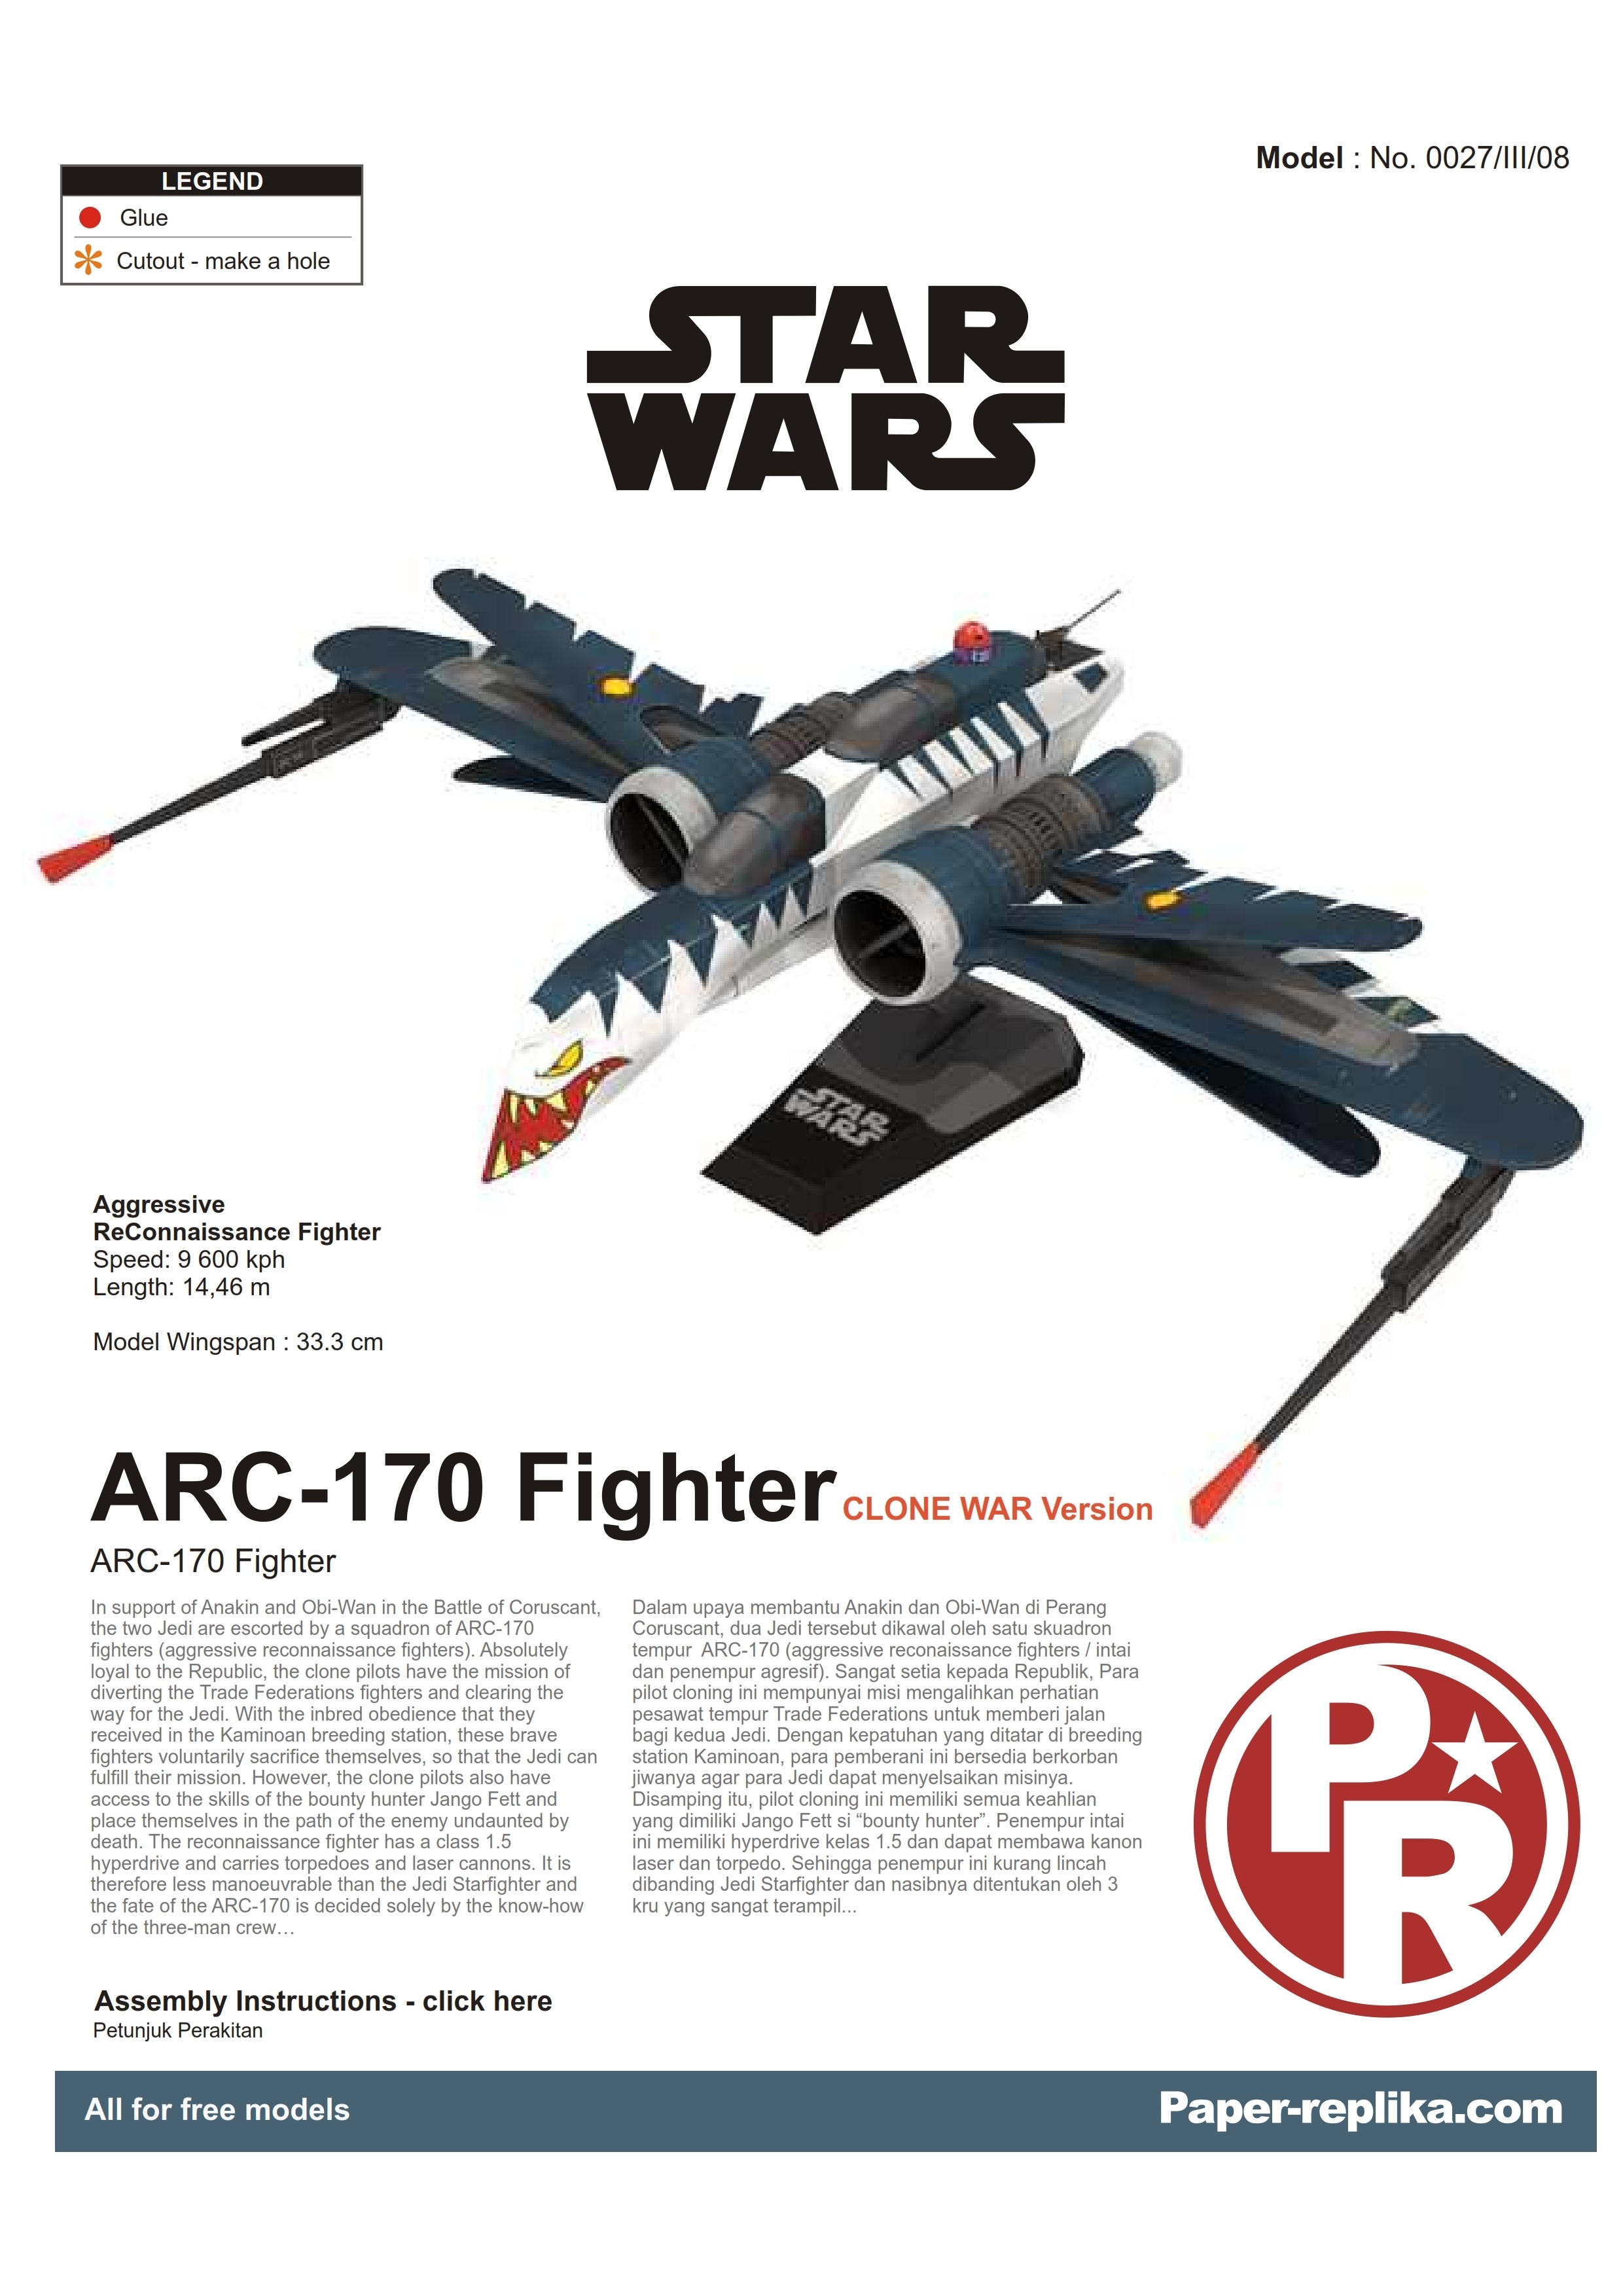 Star Wars - ARC-170 Starfighter Clone War 2 vers. scale 1-38A4 - 01 blue.jpg